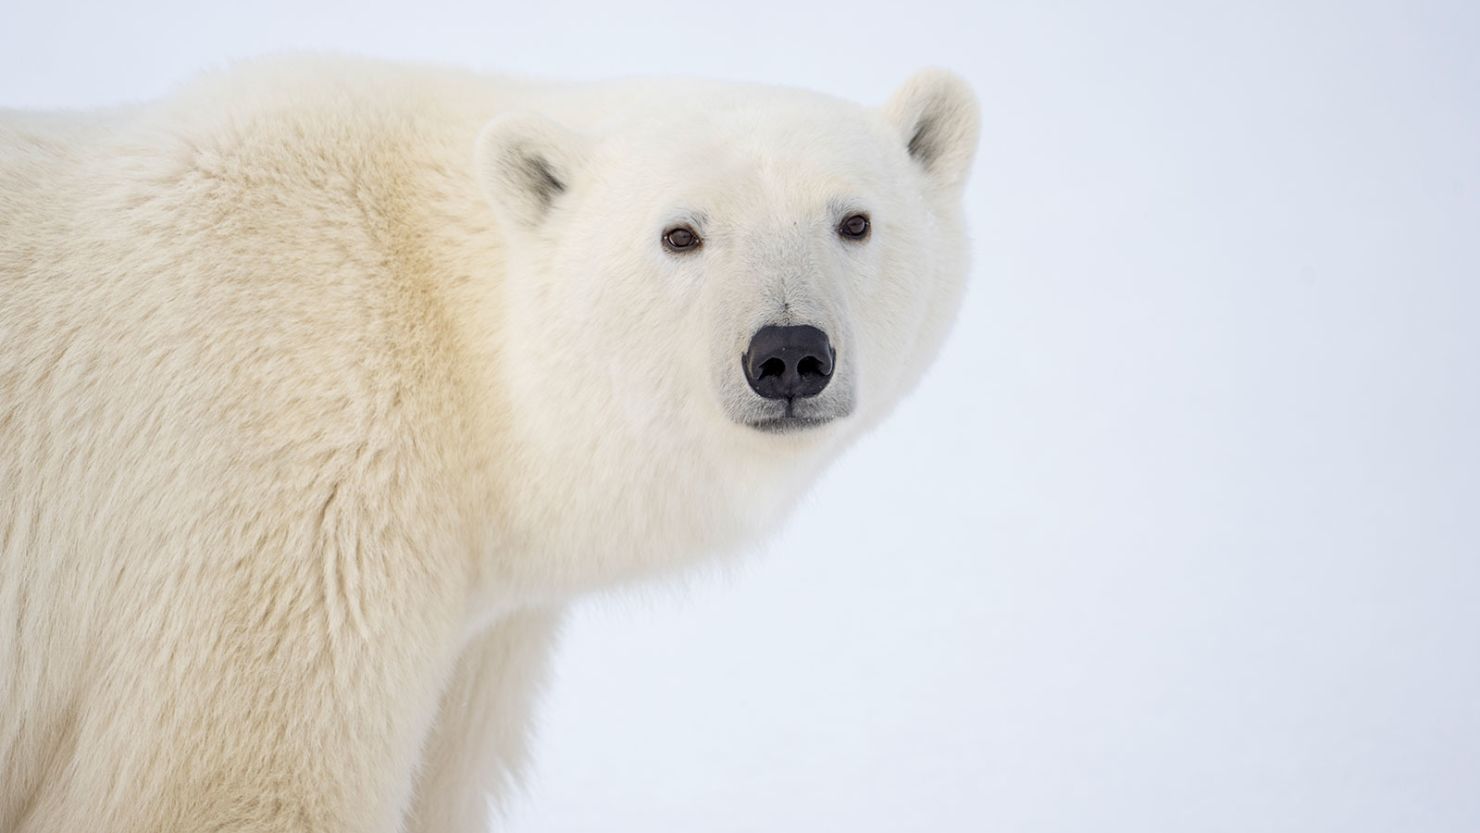 https://media.cnn.com/api/v1/images/stellar/prod/230830120643-02-polar-bears-international-climate-study.jpg?c=16x9&q=h_833,w_1480,c_fill